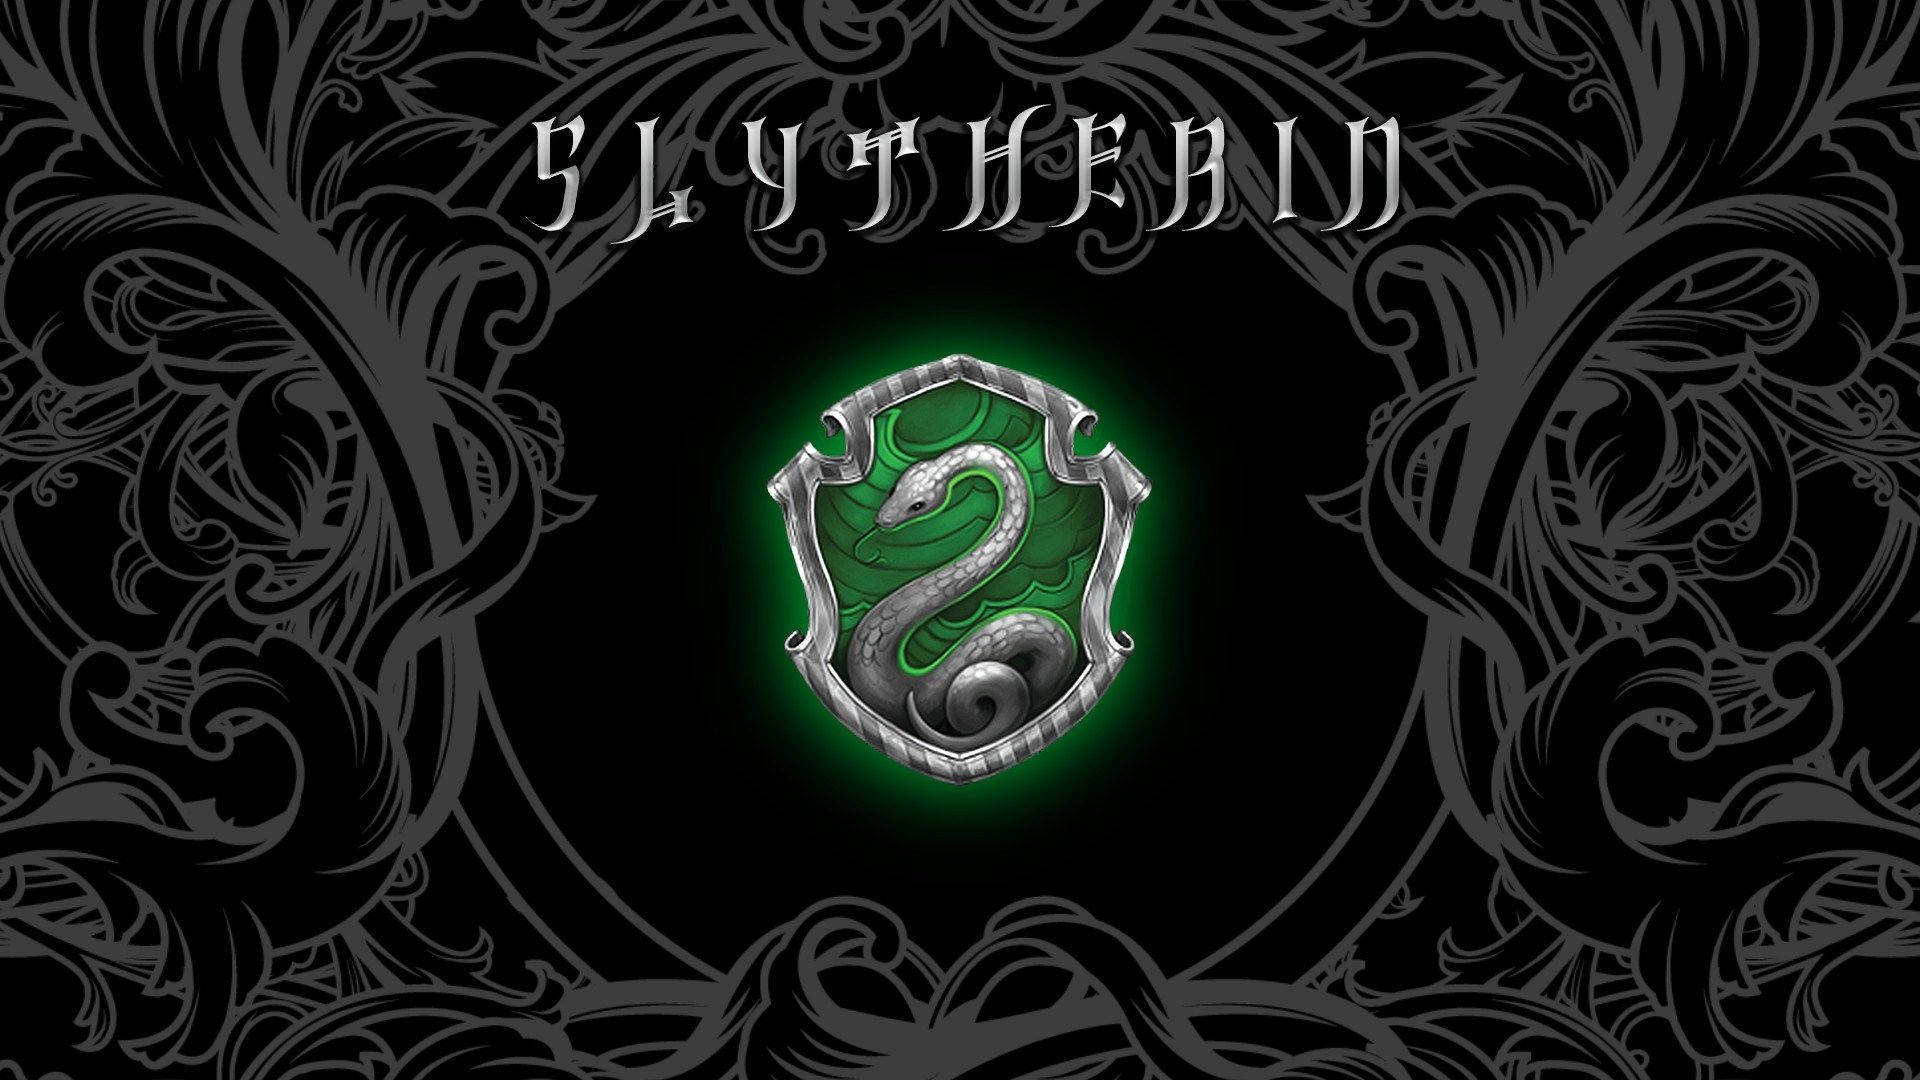 Slytherin Harry Potter Computer Background. Slytherin wallpaper, Desktop wallpaper harry potter, Slytherin crest